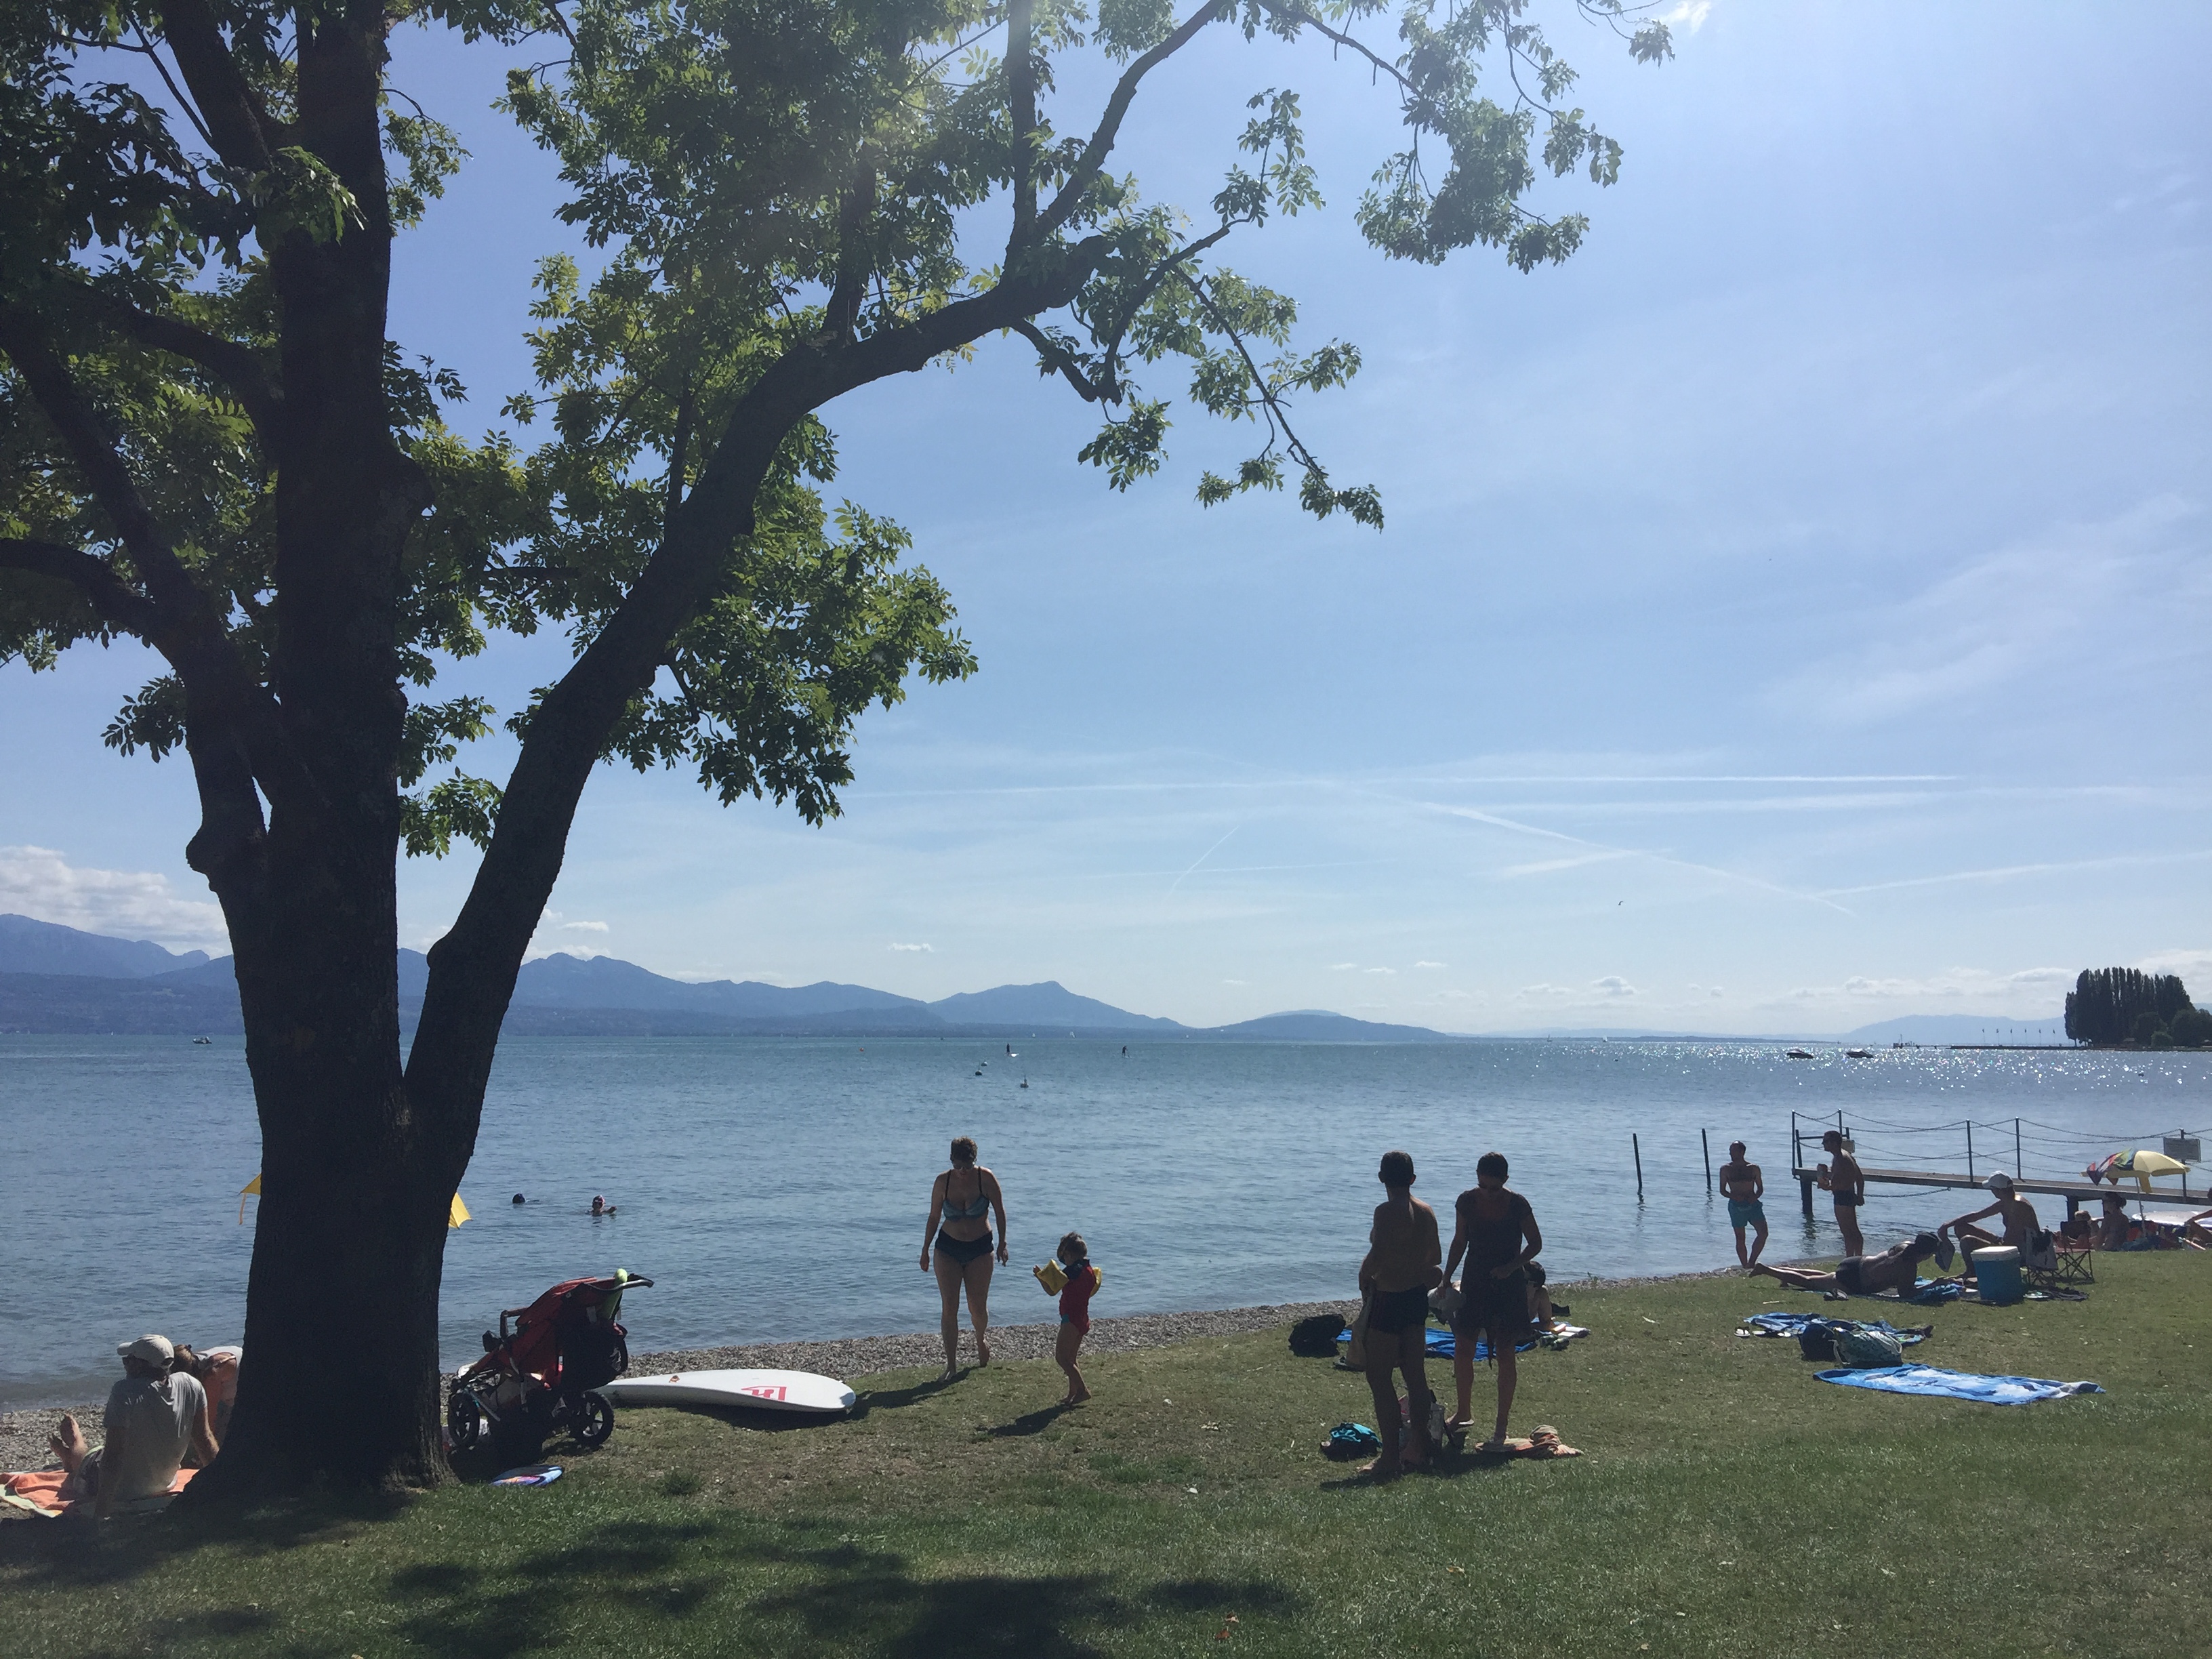 The Geneva Lake